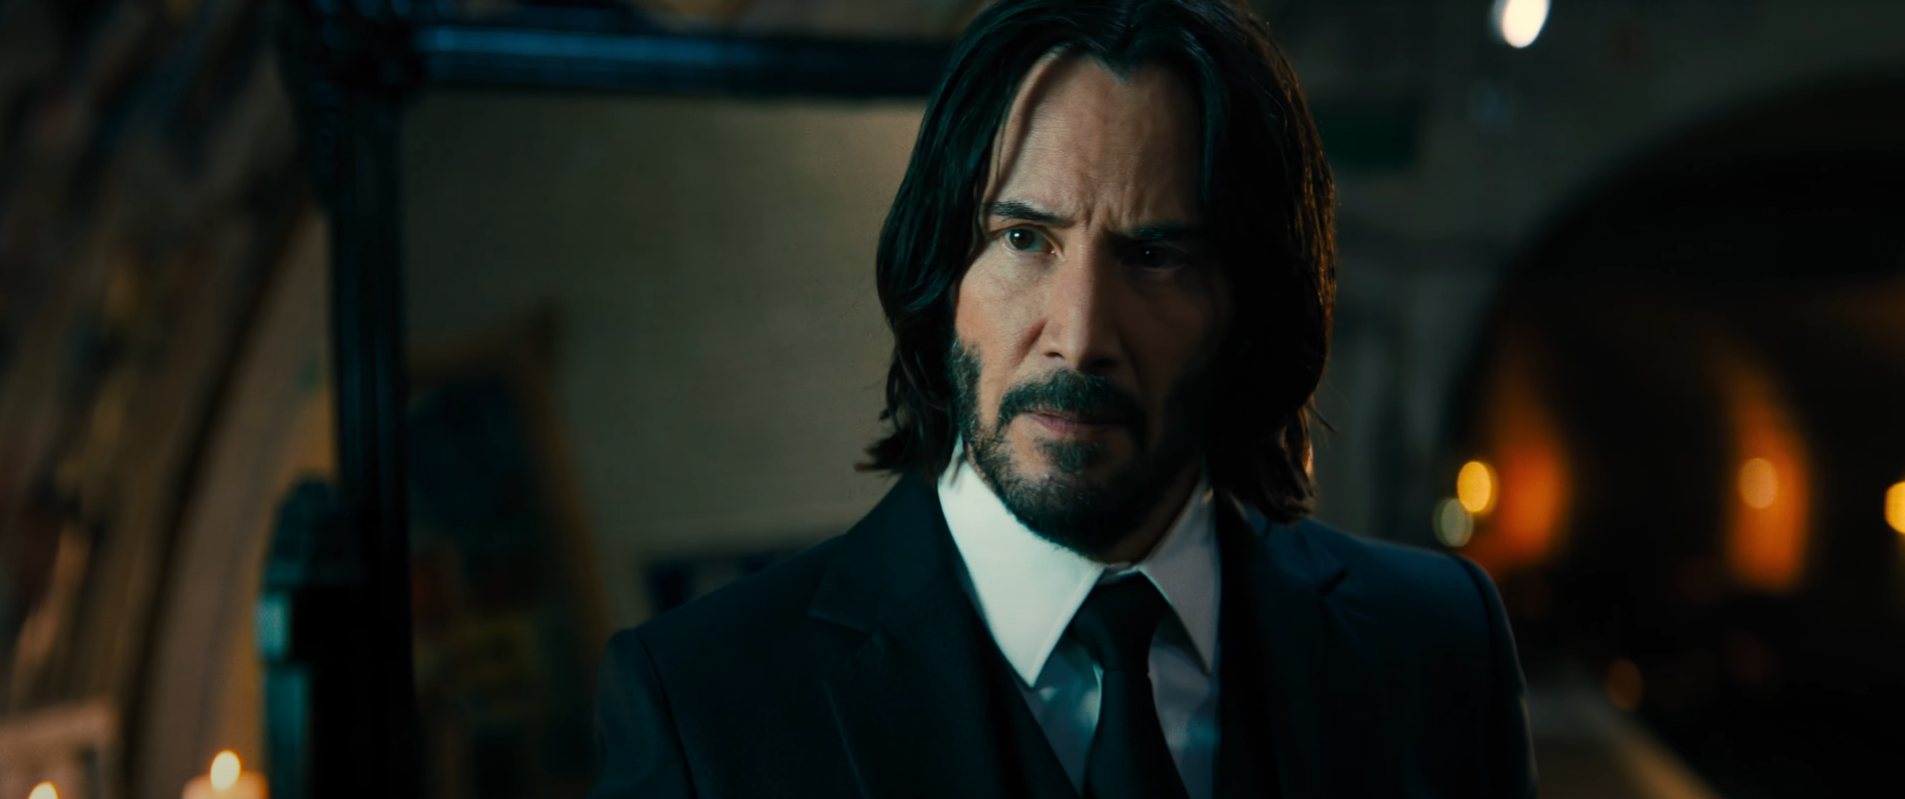 Keanu Reeves as John Wick in a suit looking toward the camera